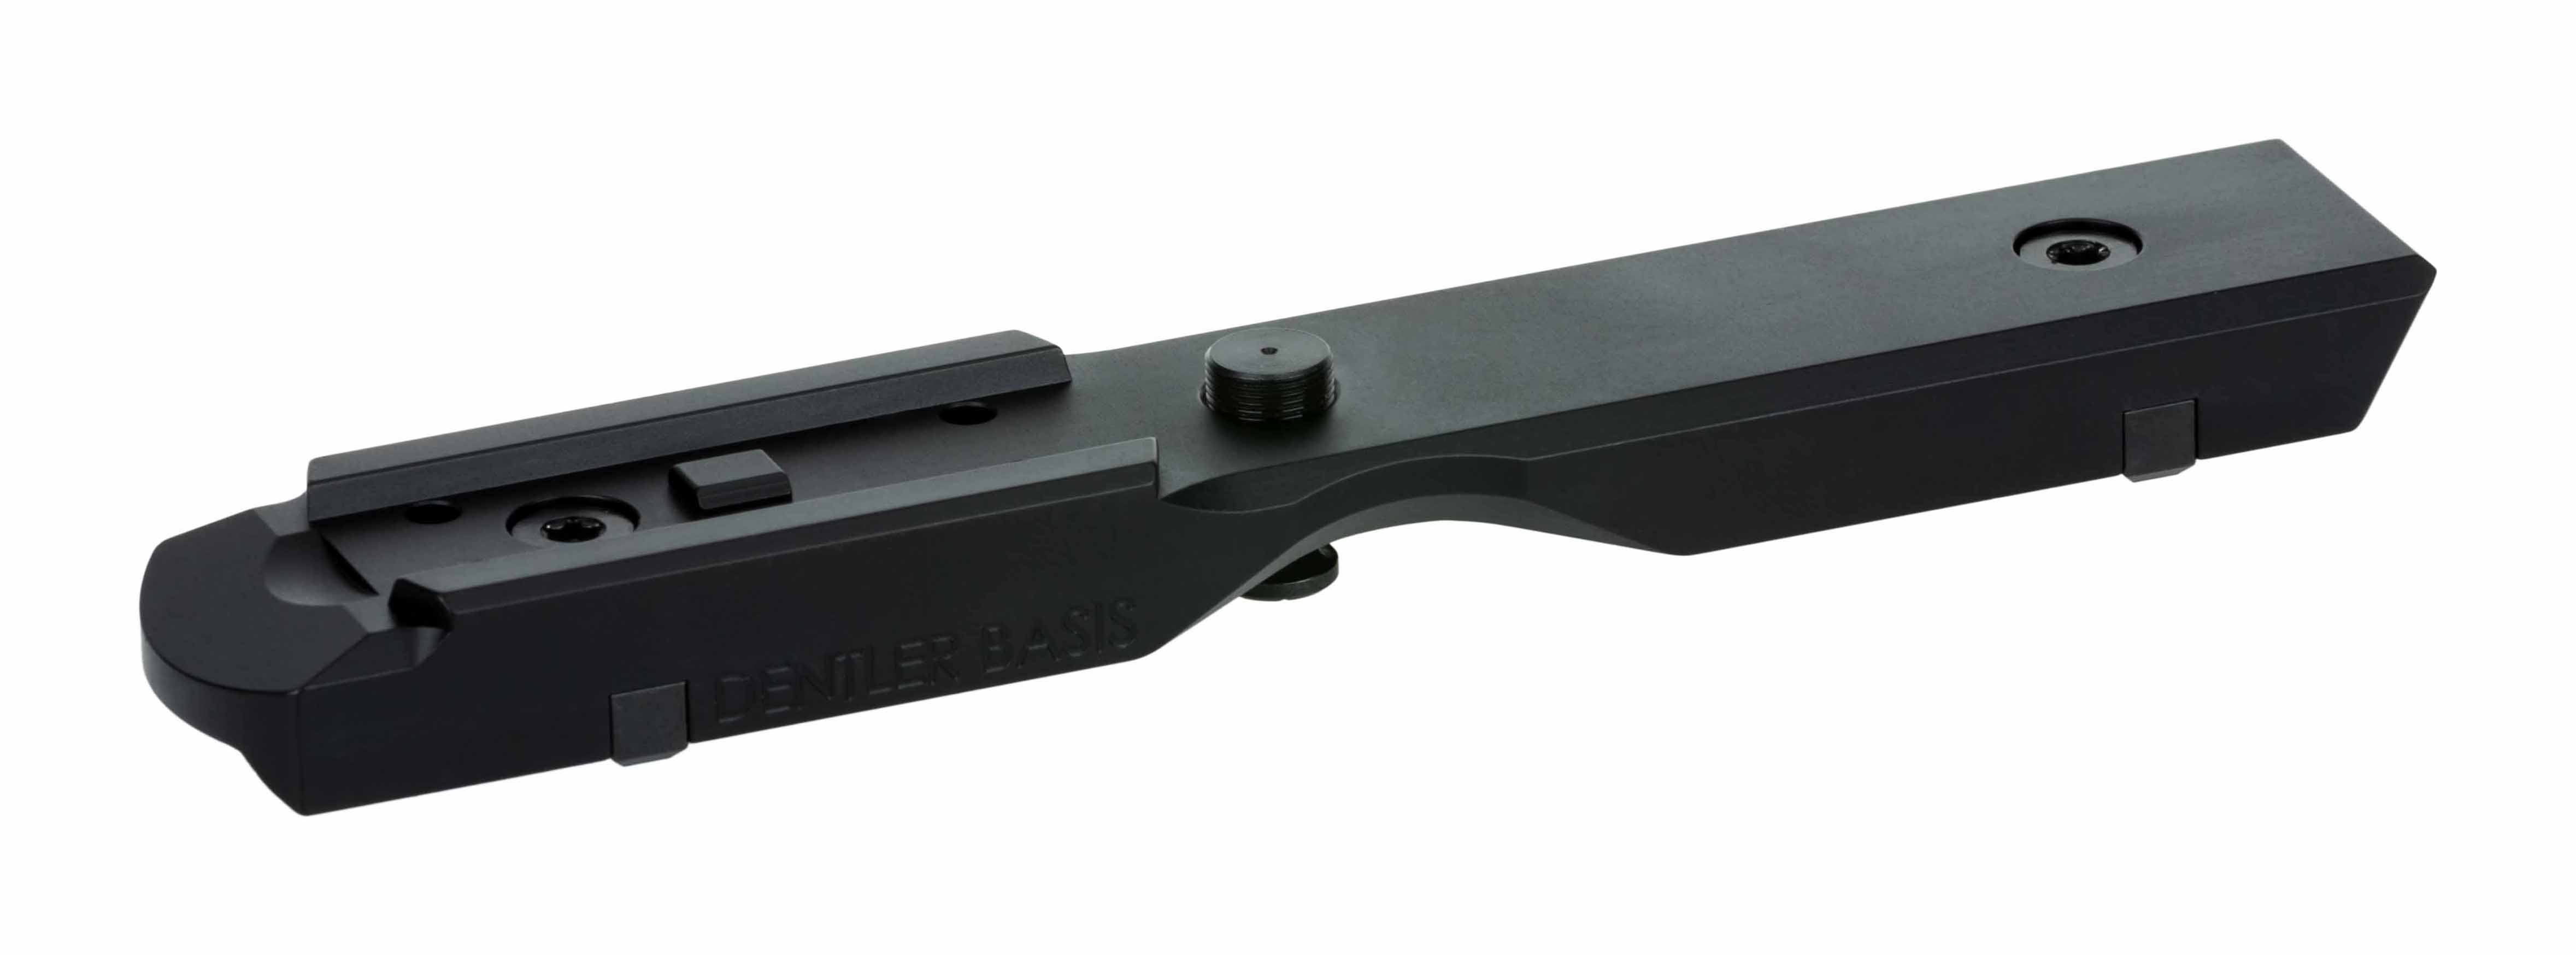 Dentler mounting rail BASIS - Aimpoint Micro H1 (Dural)